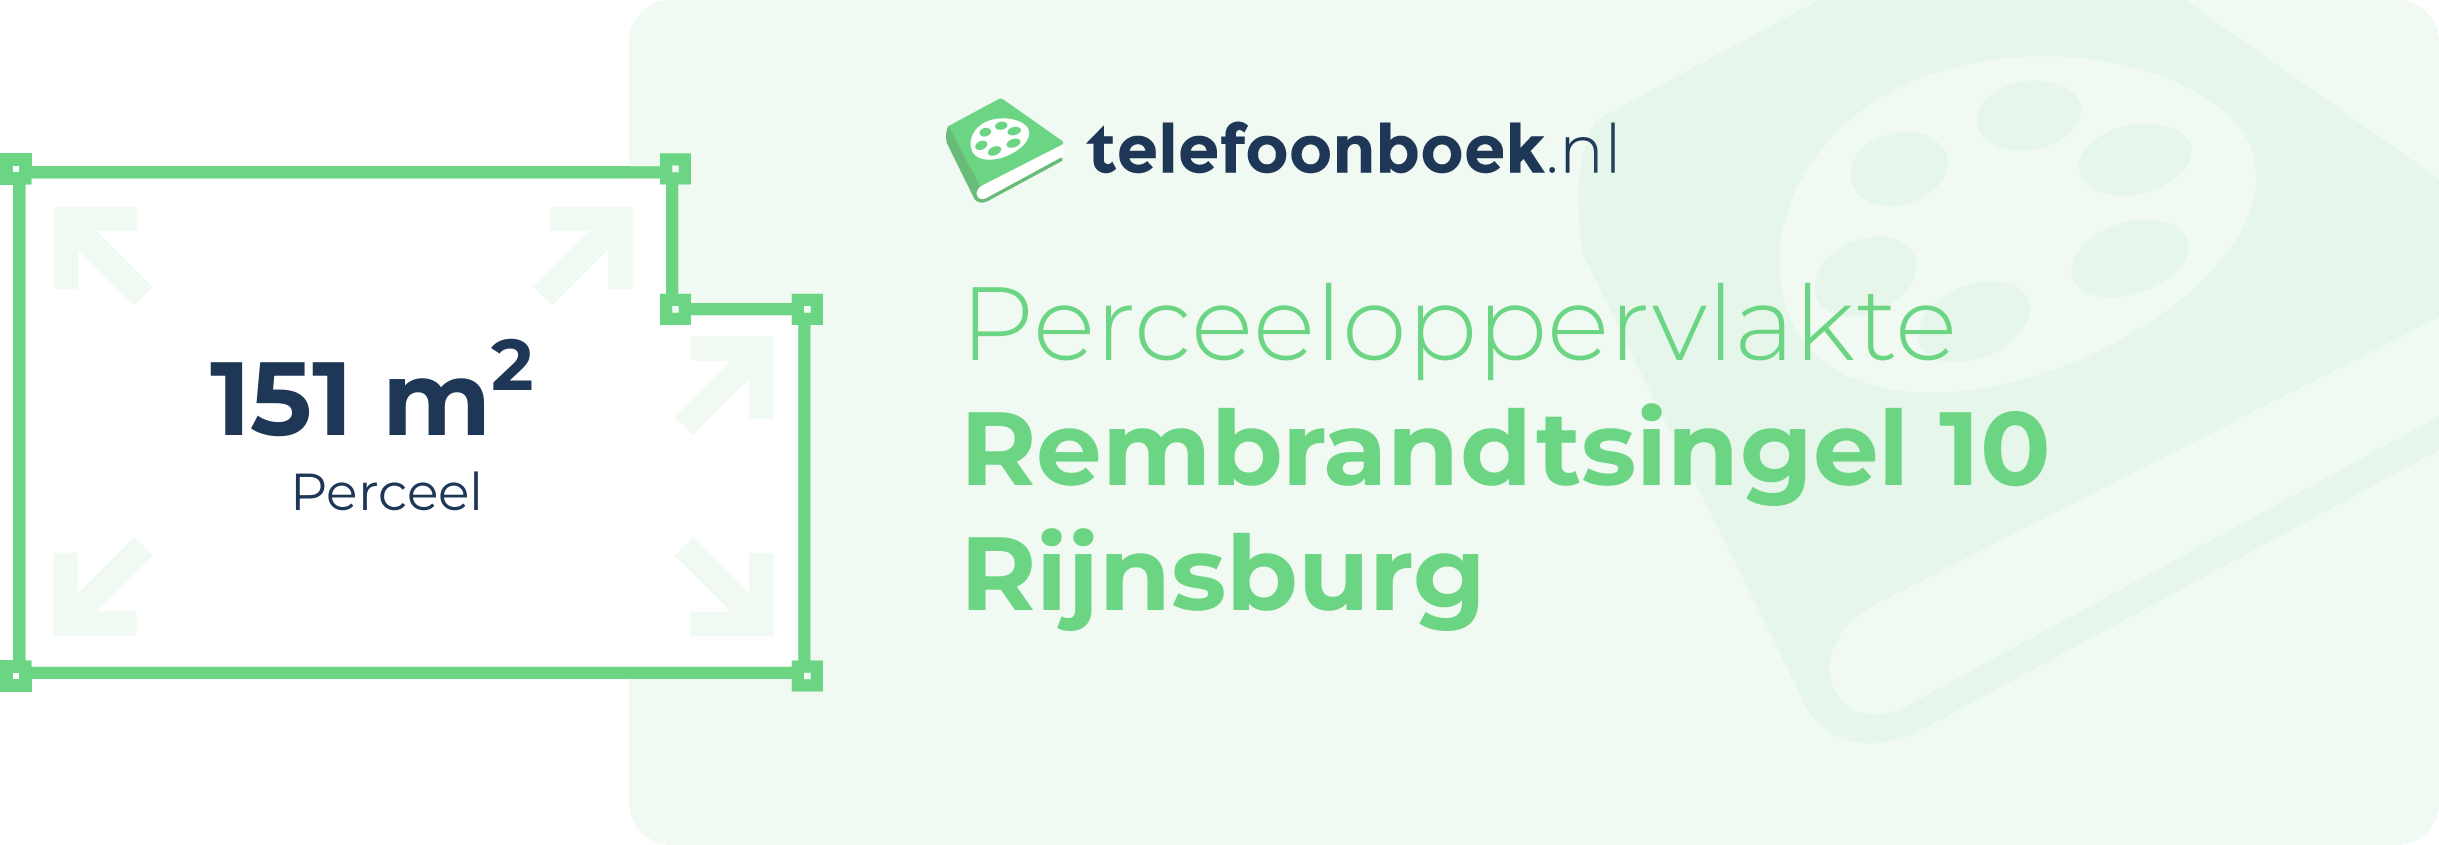 Perceeloppervlakte Rembrandtsingel 10 Rijnsburg